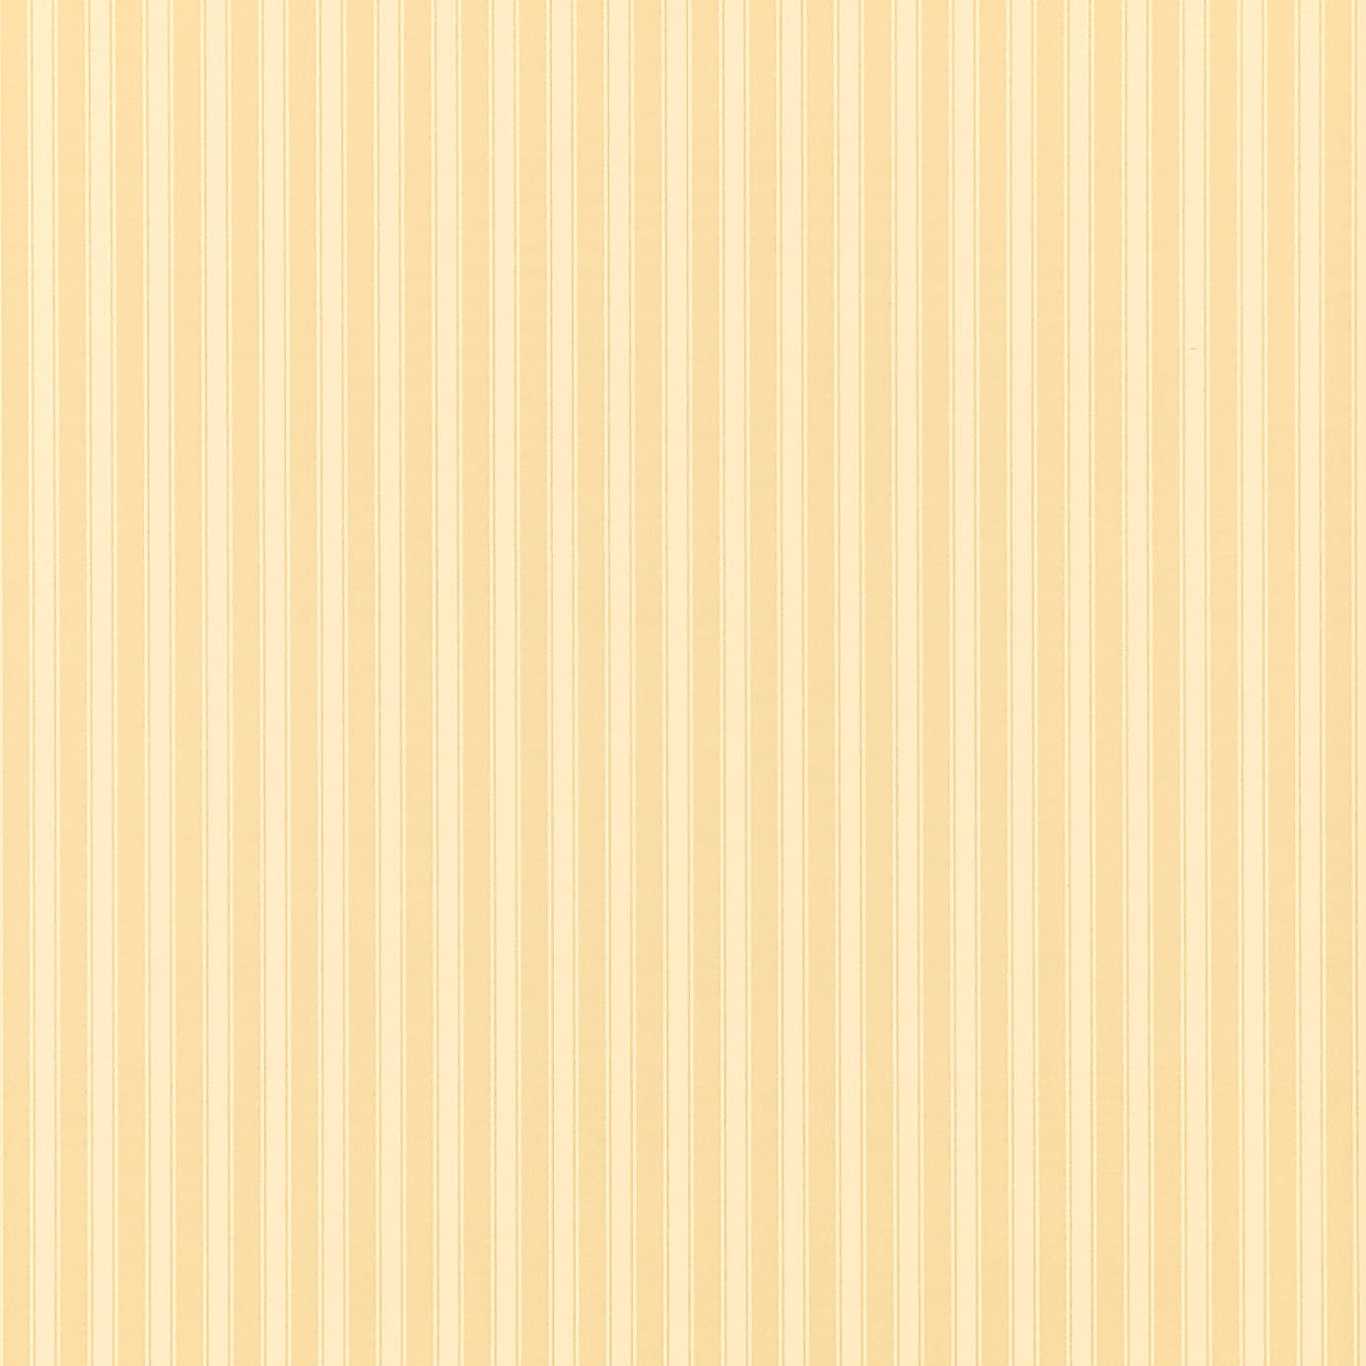 New Tiger Stripe Wallpaper by Sanderson